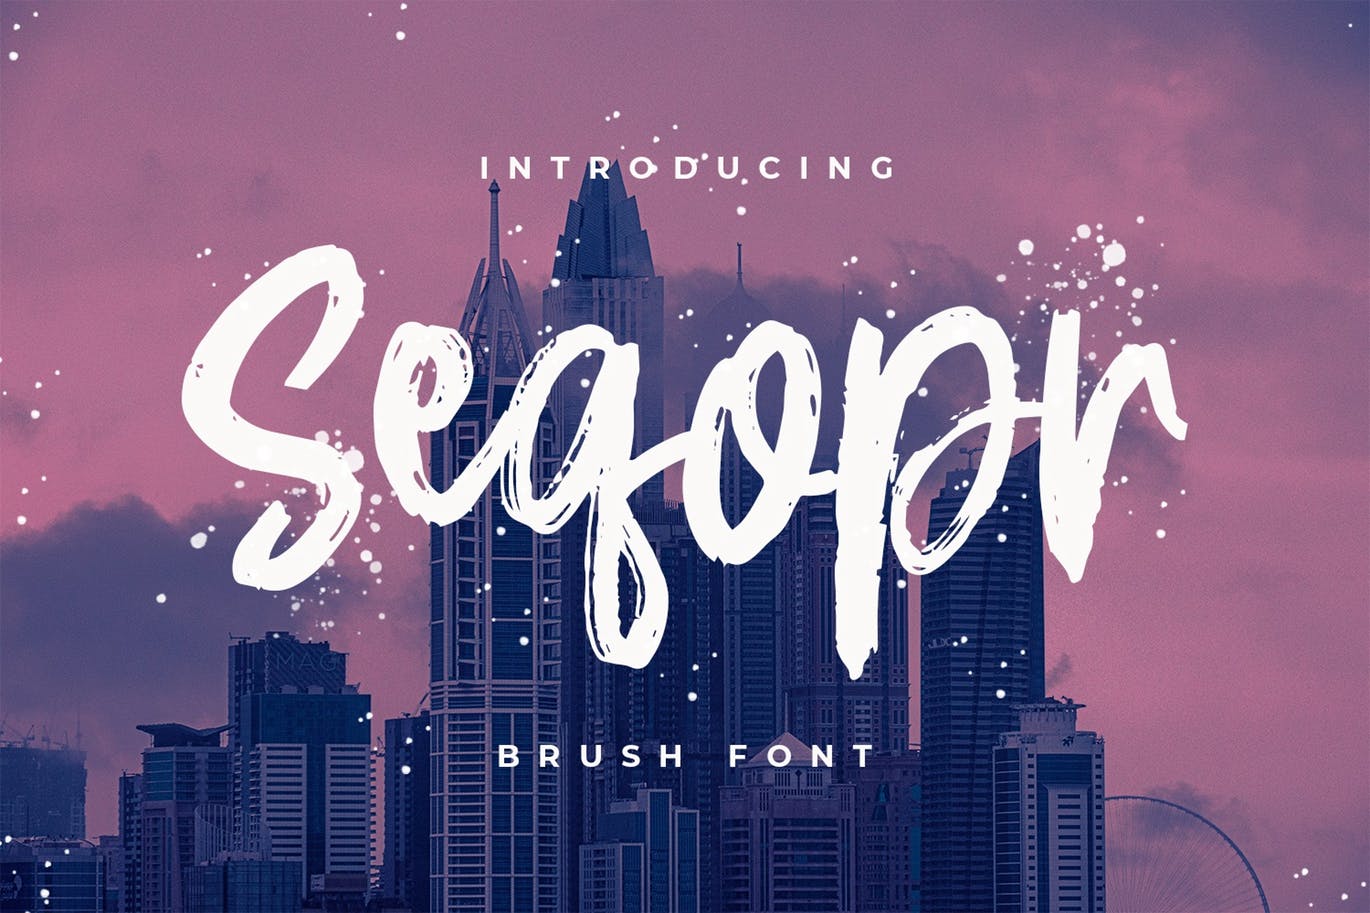 Logo/印刷设计英文笔刷字体大洋岛精选 Seqopr – The Brush Font插图